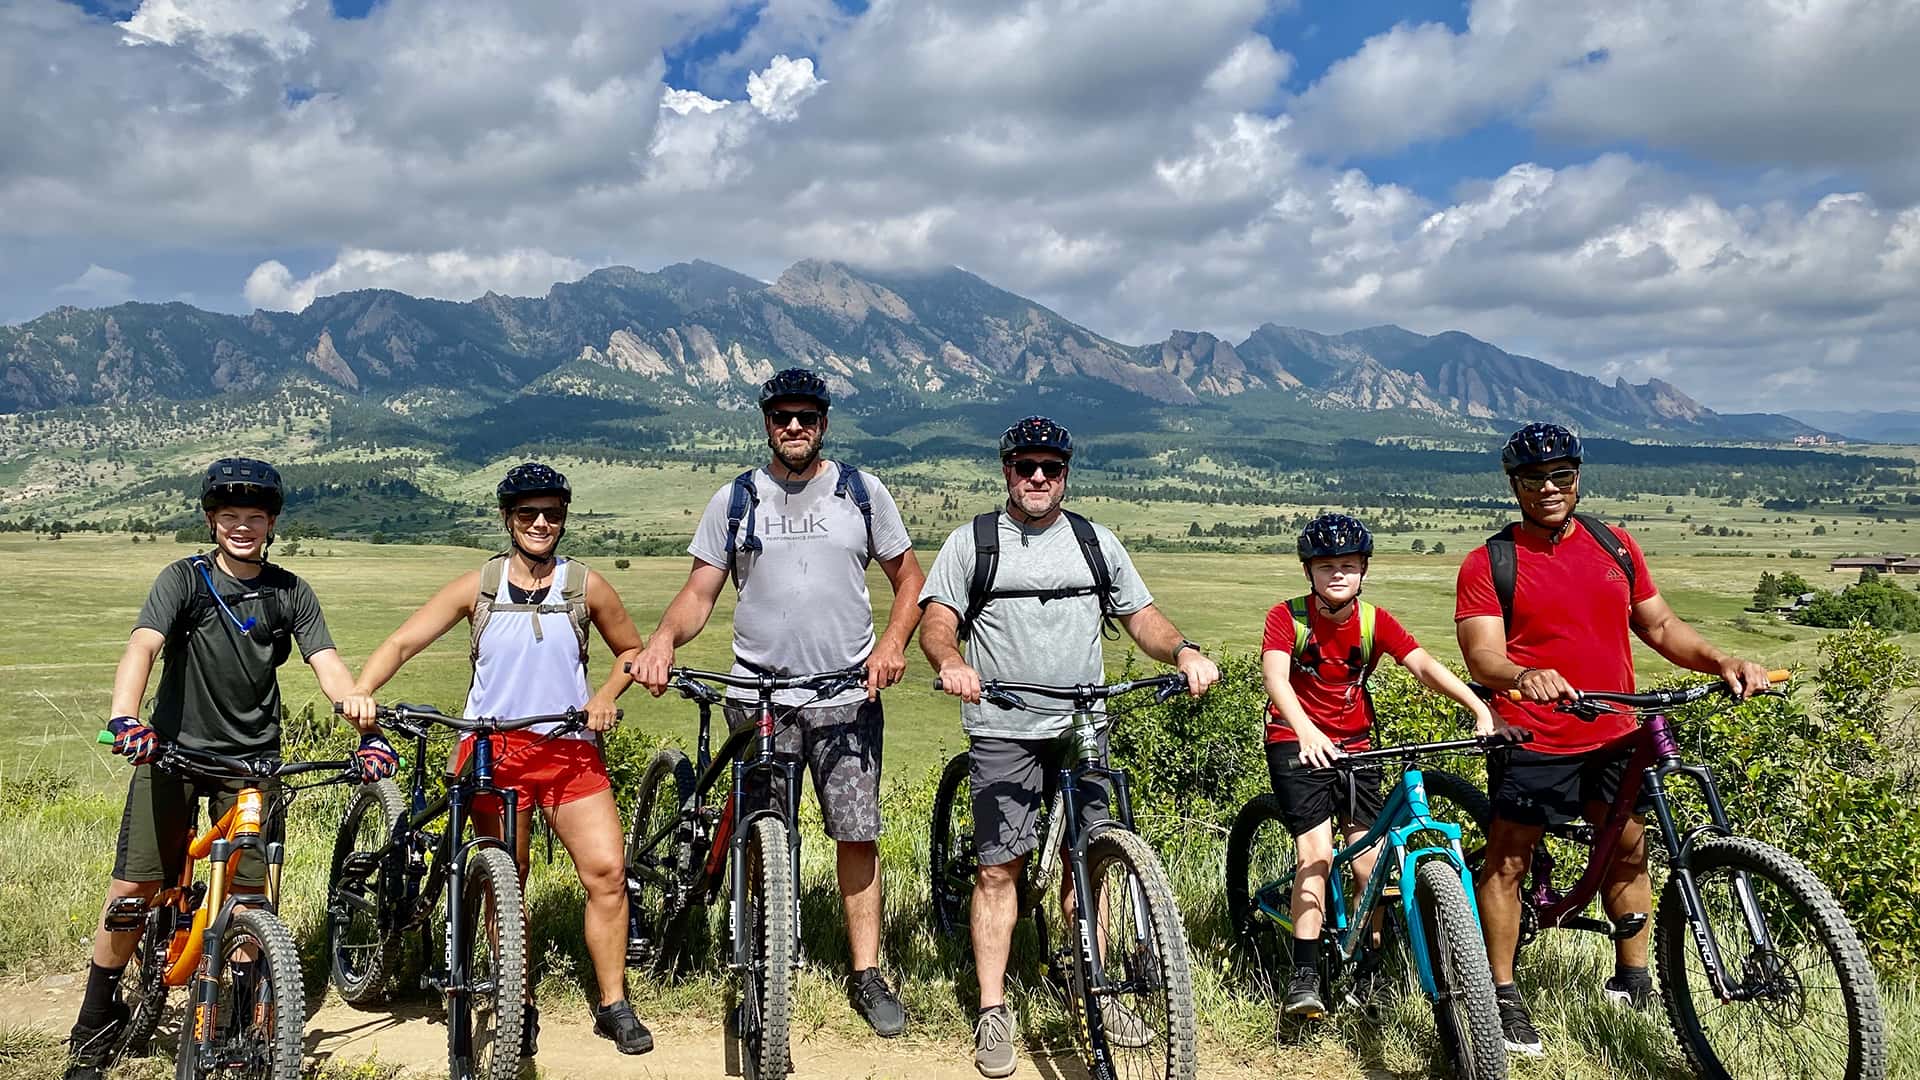 Guided Mountain Bike Tours of Colorado